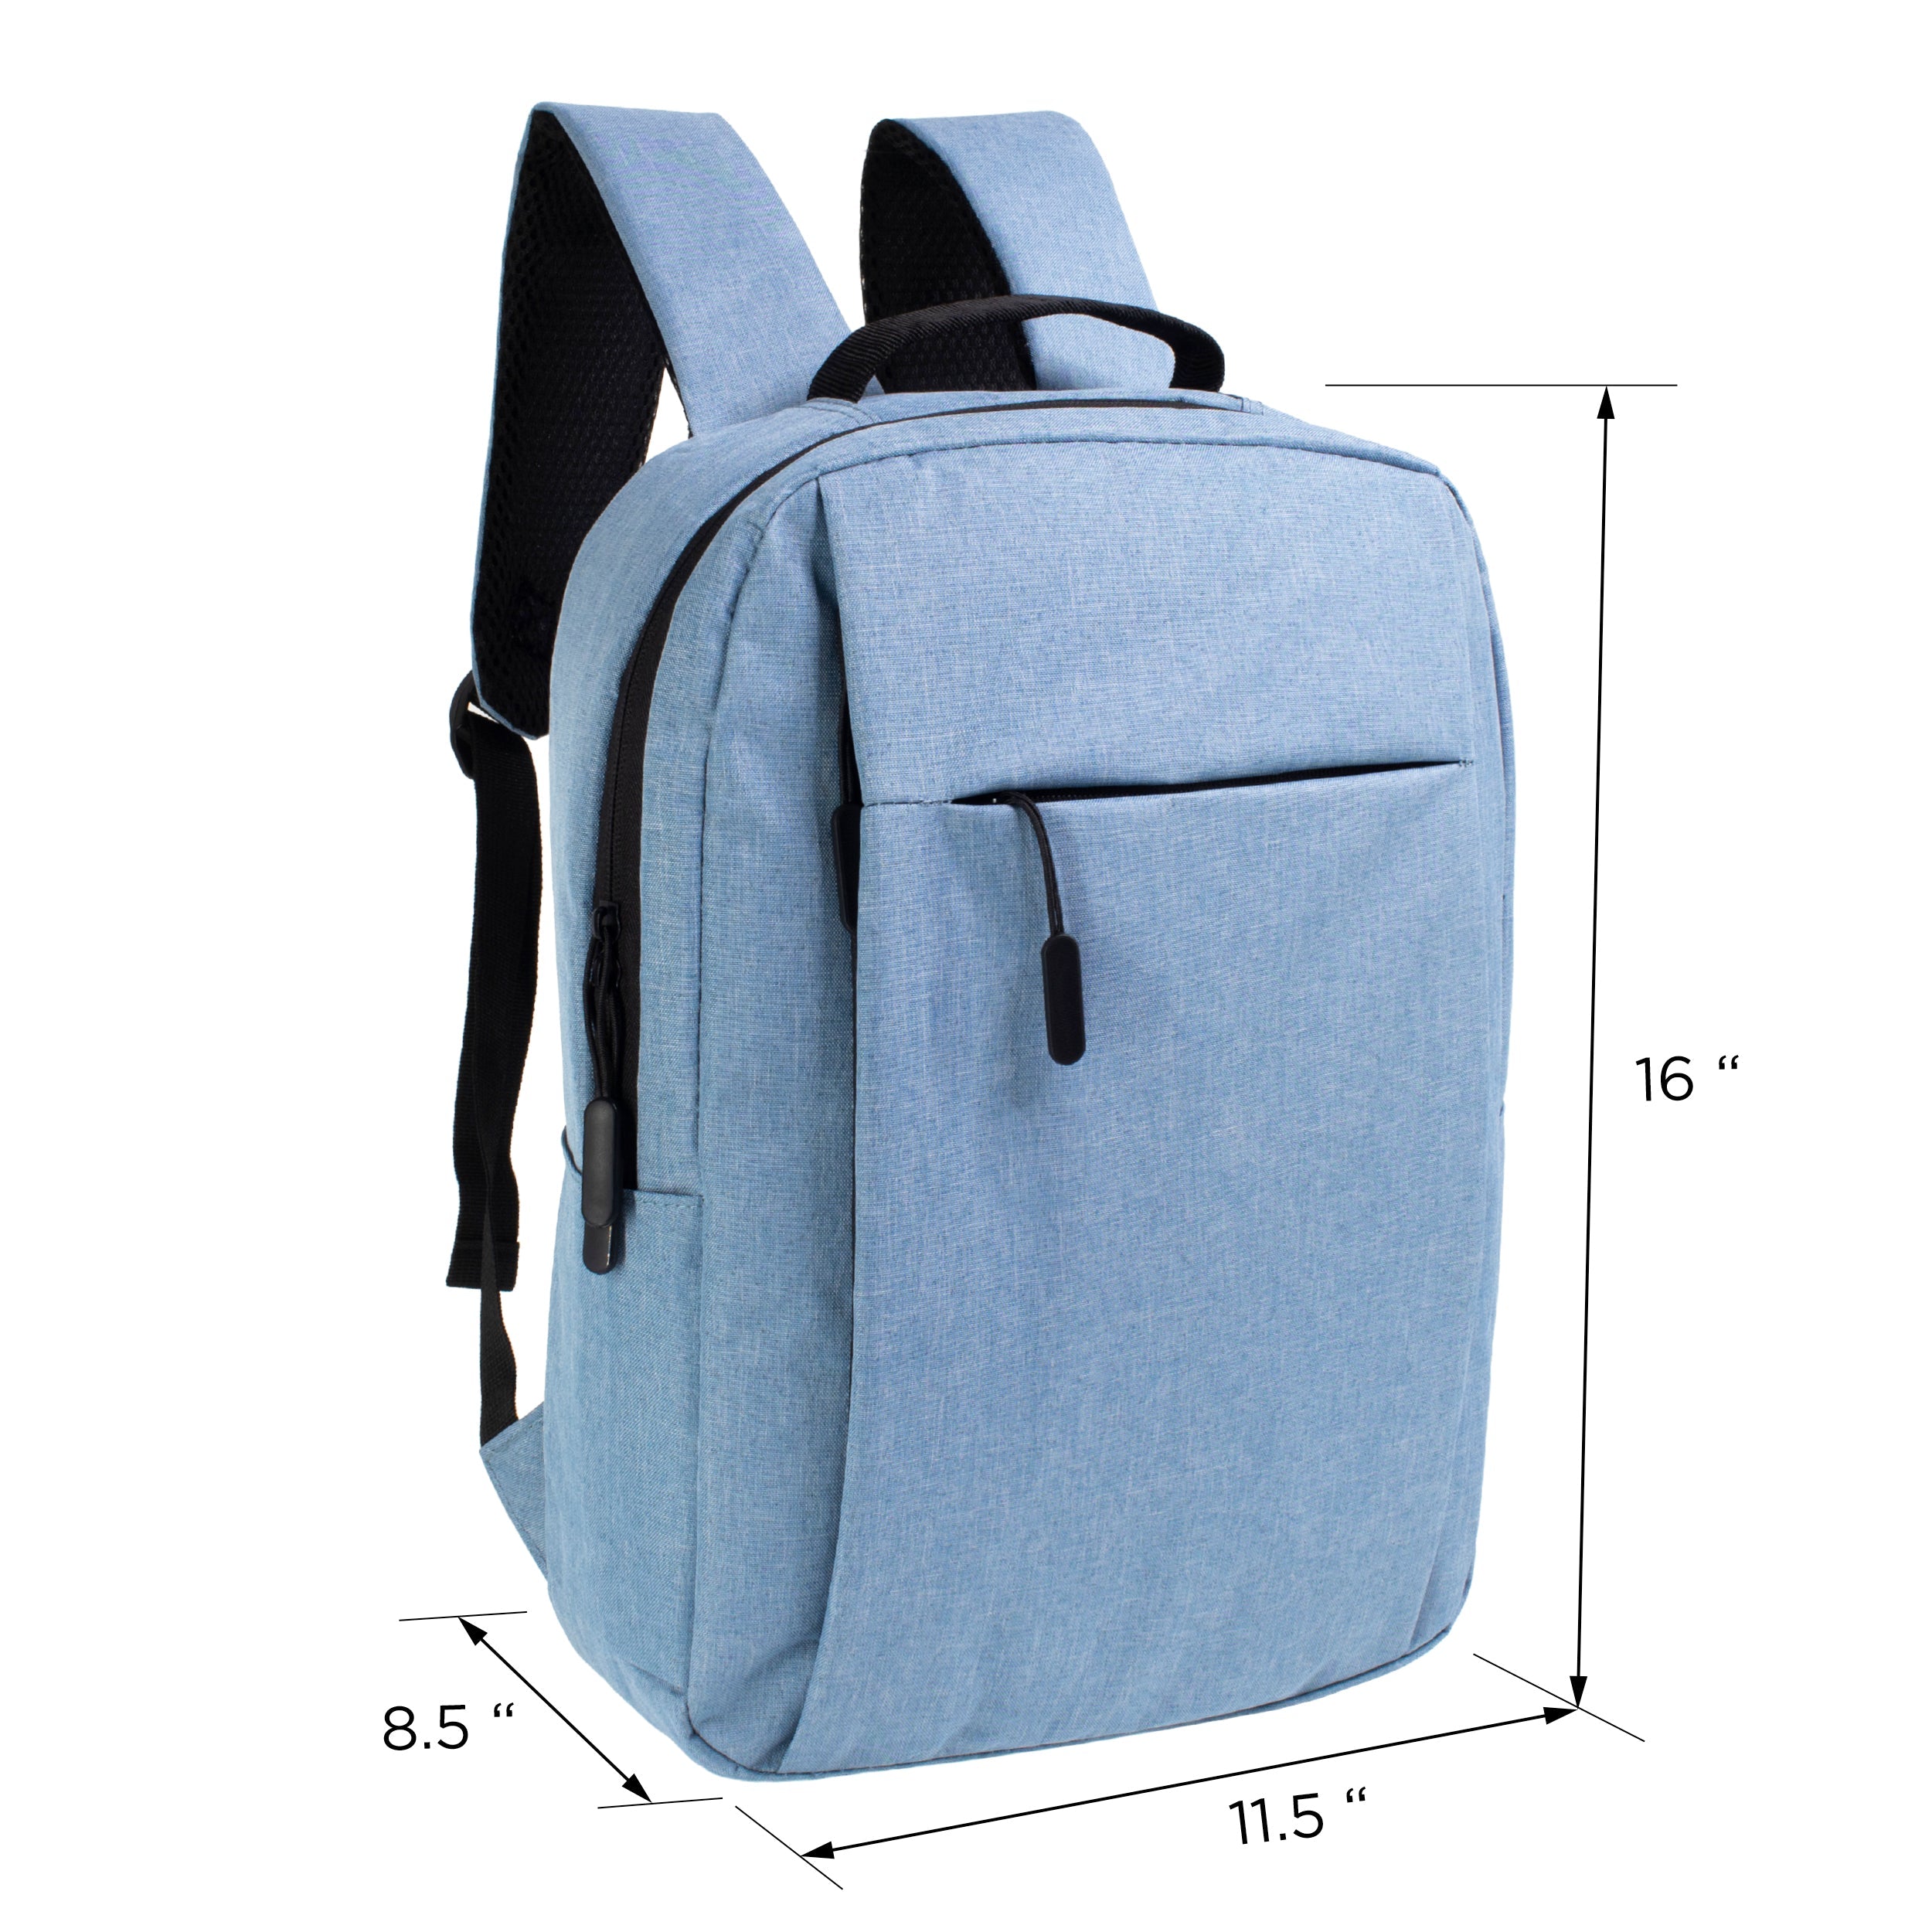 16" Wholesale Premium Laptop Backpacks in 3 Colors - Wholesale Case of 24 Bookbags